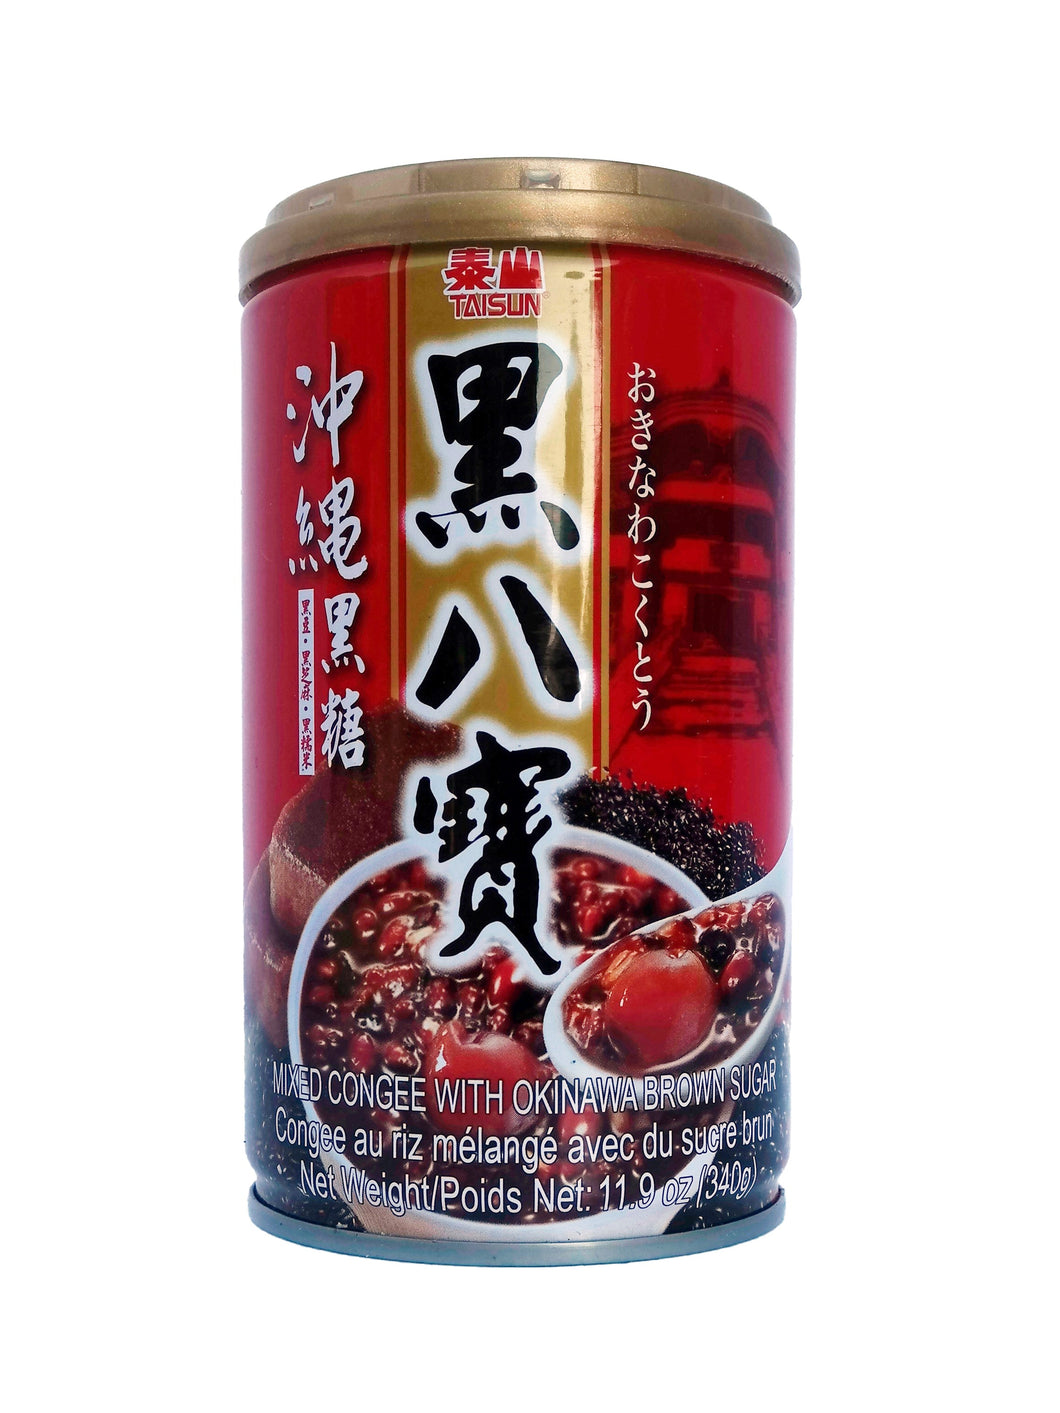 Taisun Mixed Congee With Okinawa Brown Sugar